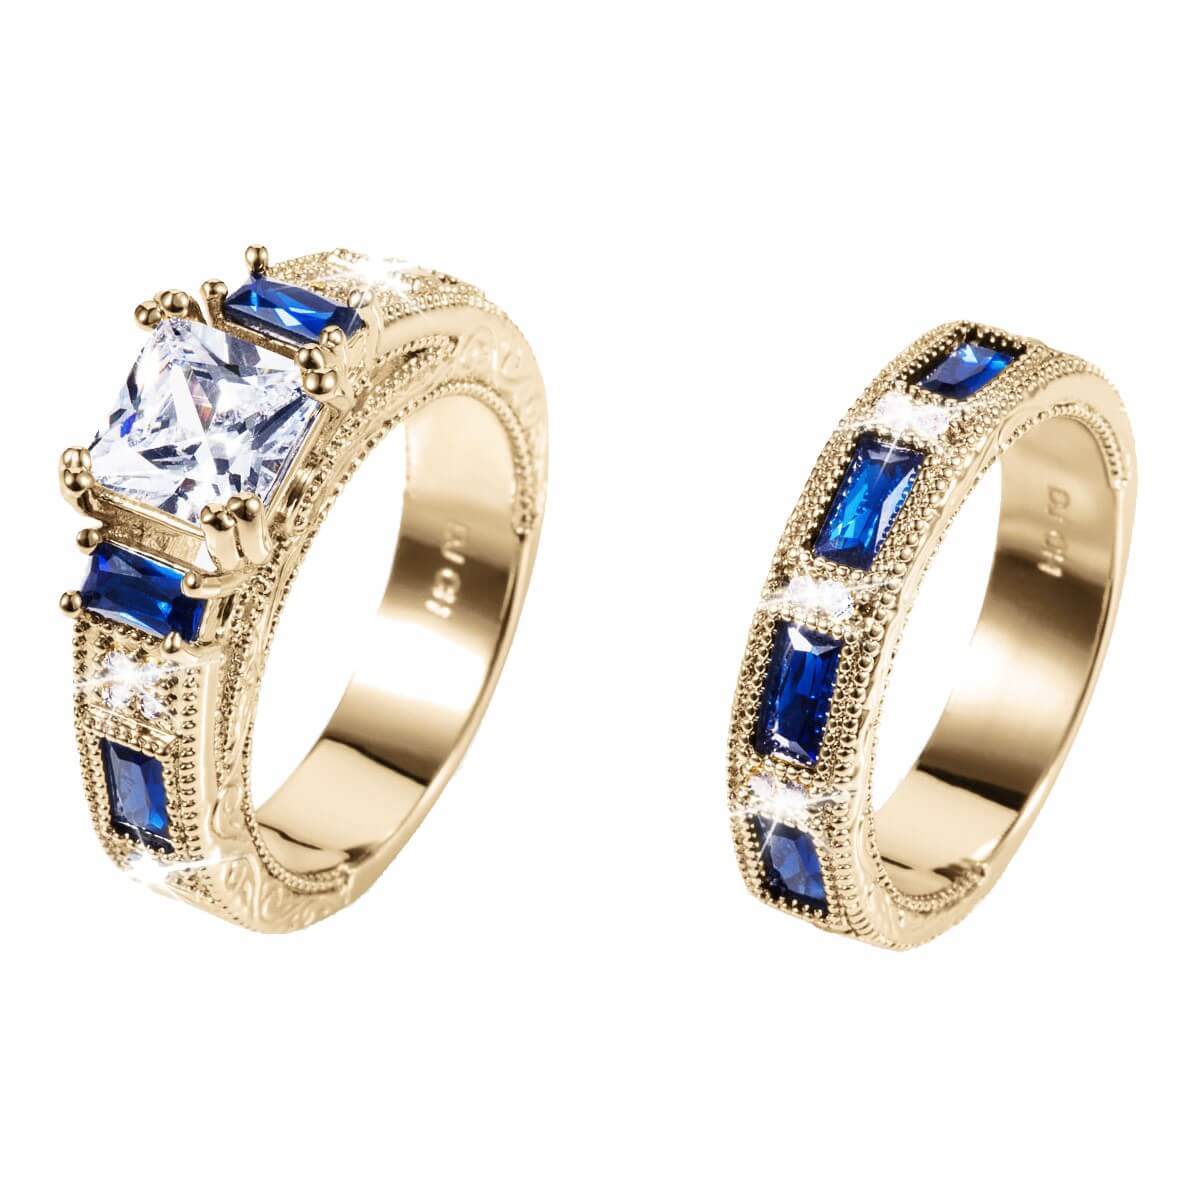 Daniel Steiger Royal Bridal Ring Set